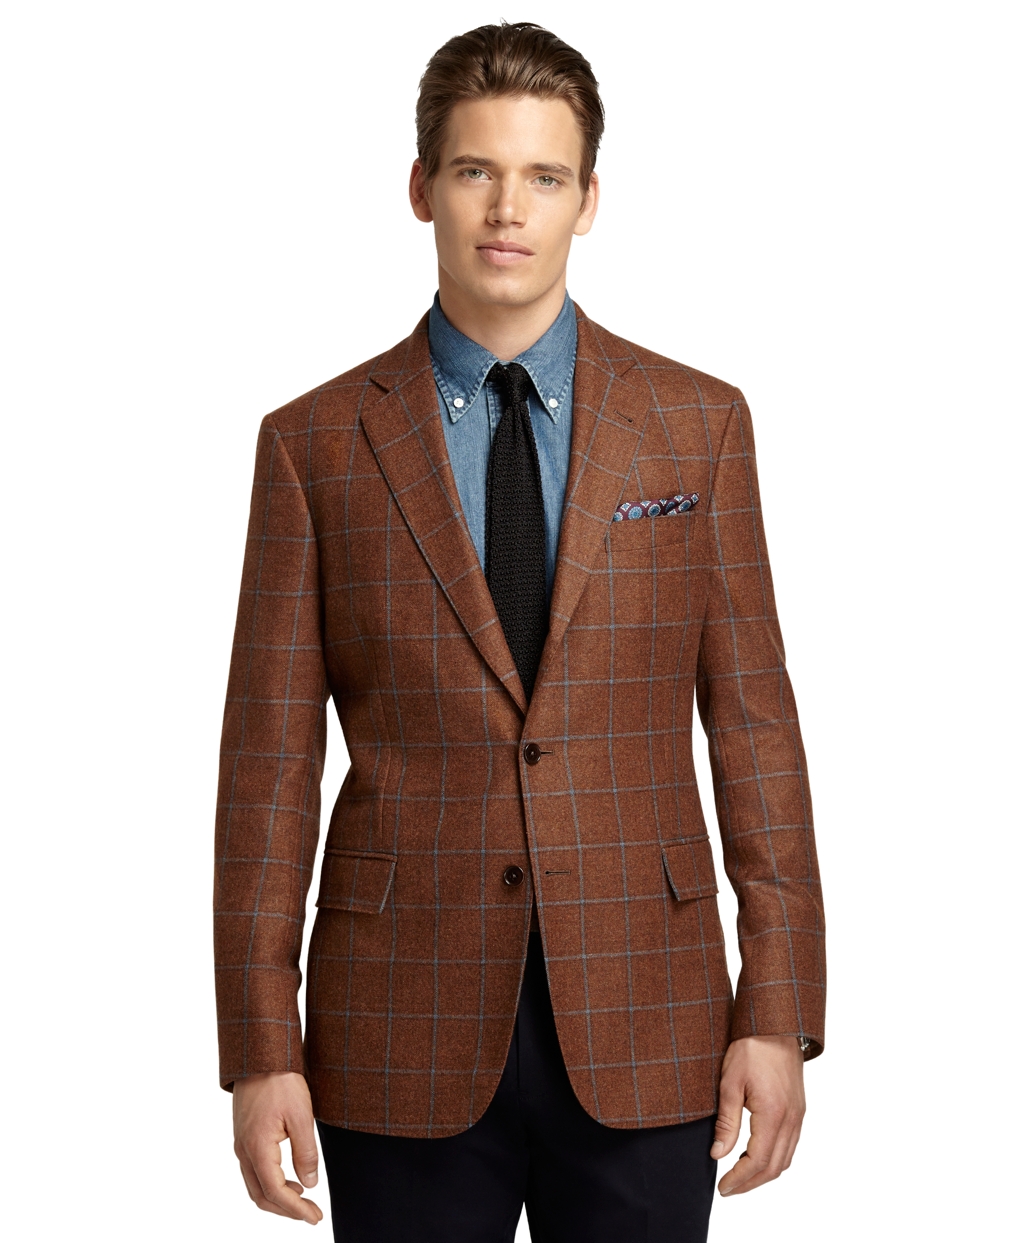 Lyst - Brooks Brothers Regent Fit Windowpane Sport Coat in Brown for Men